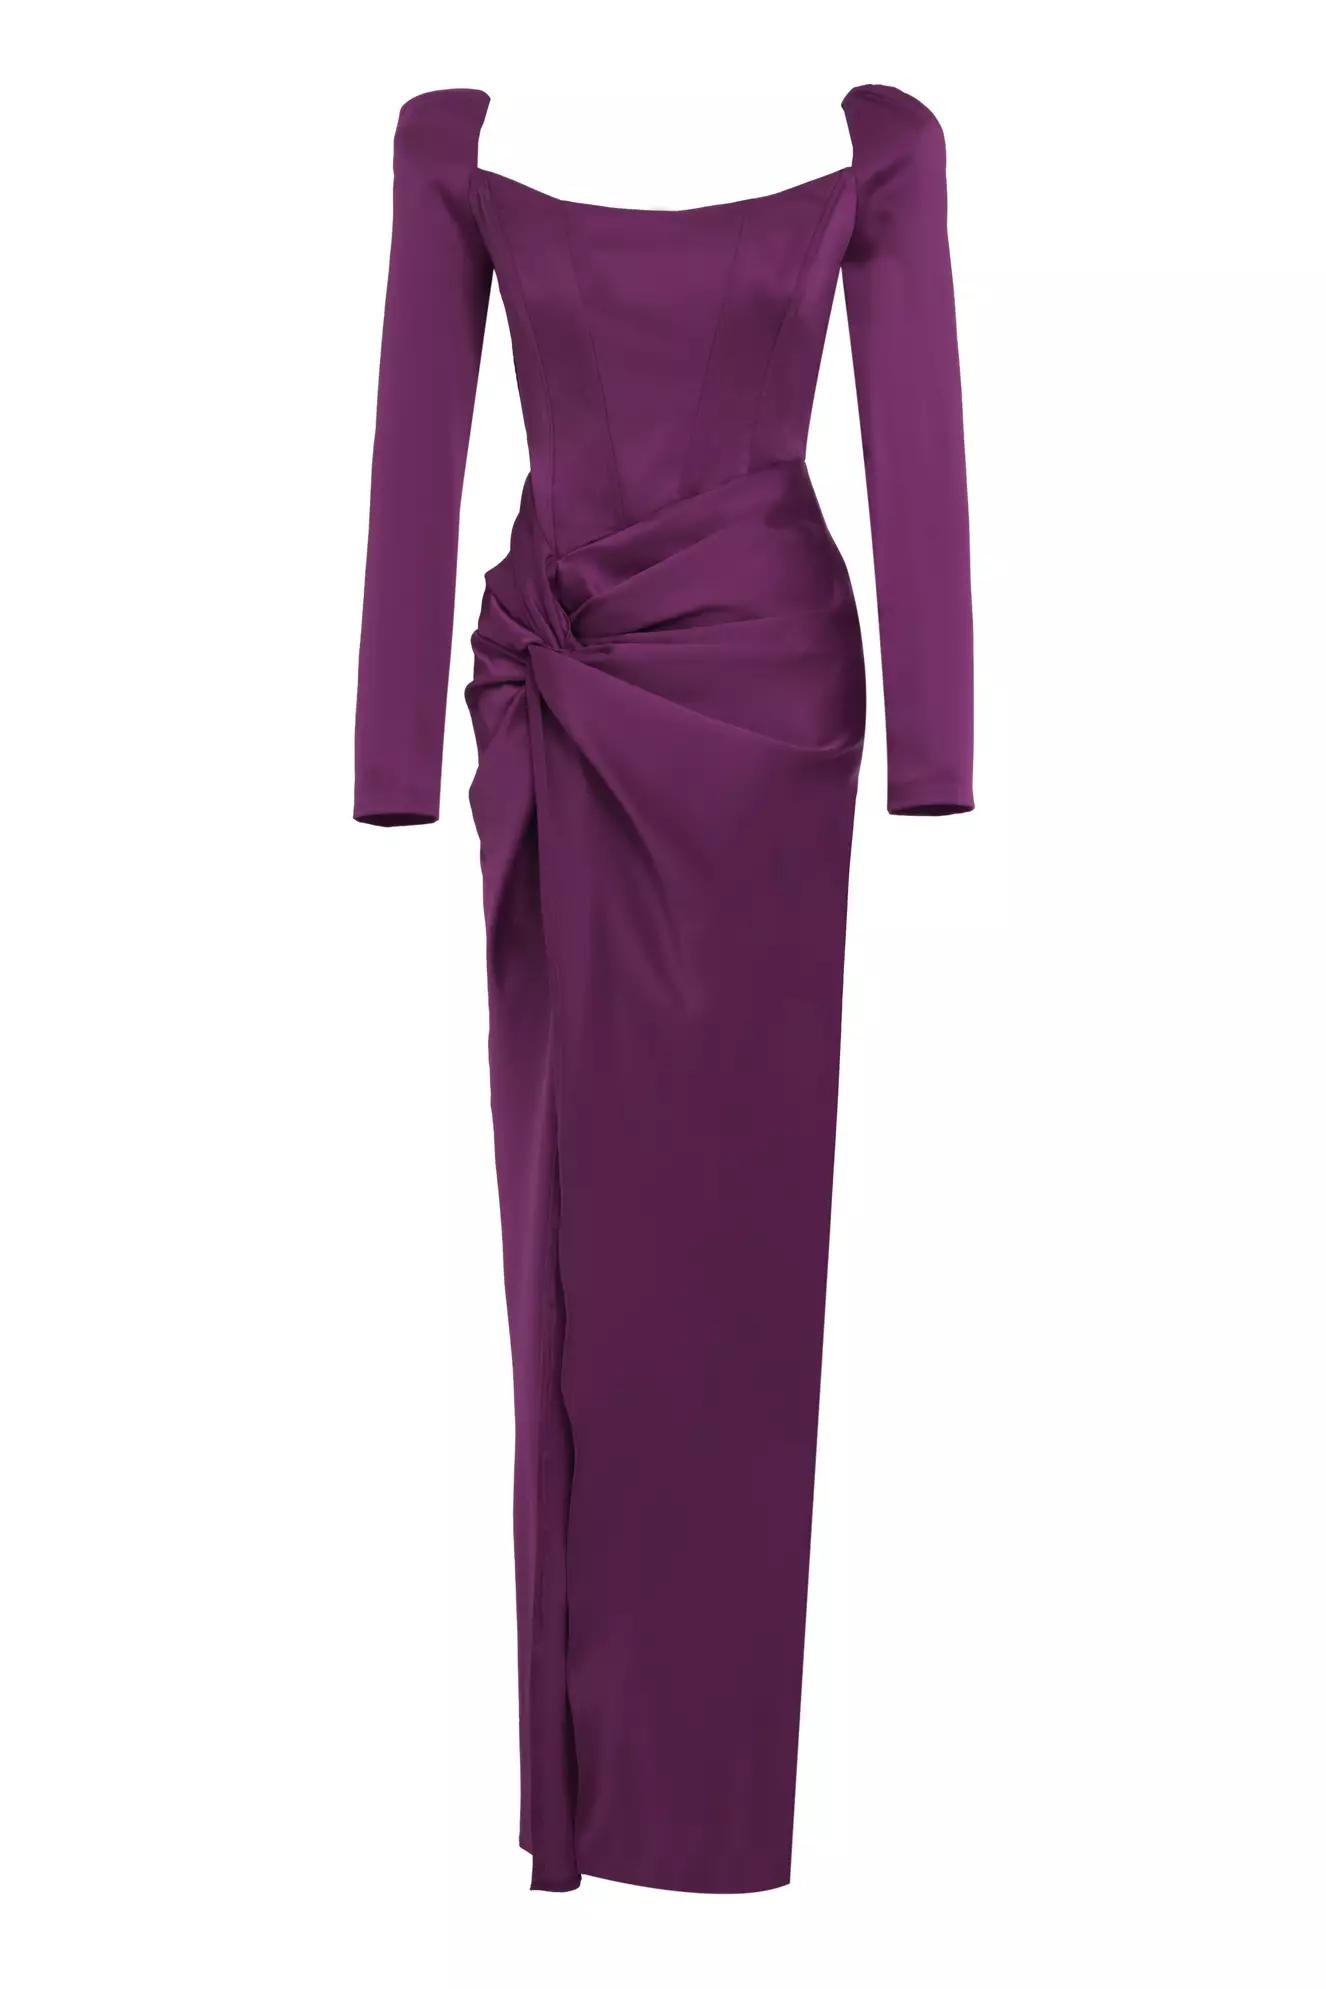 Purple satin long sleeve long dress